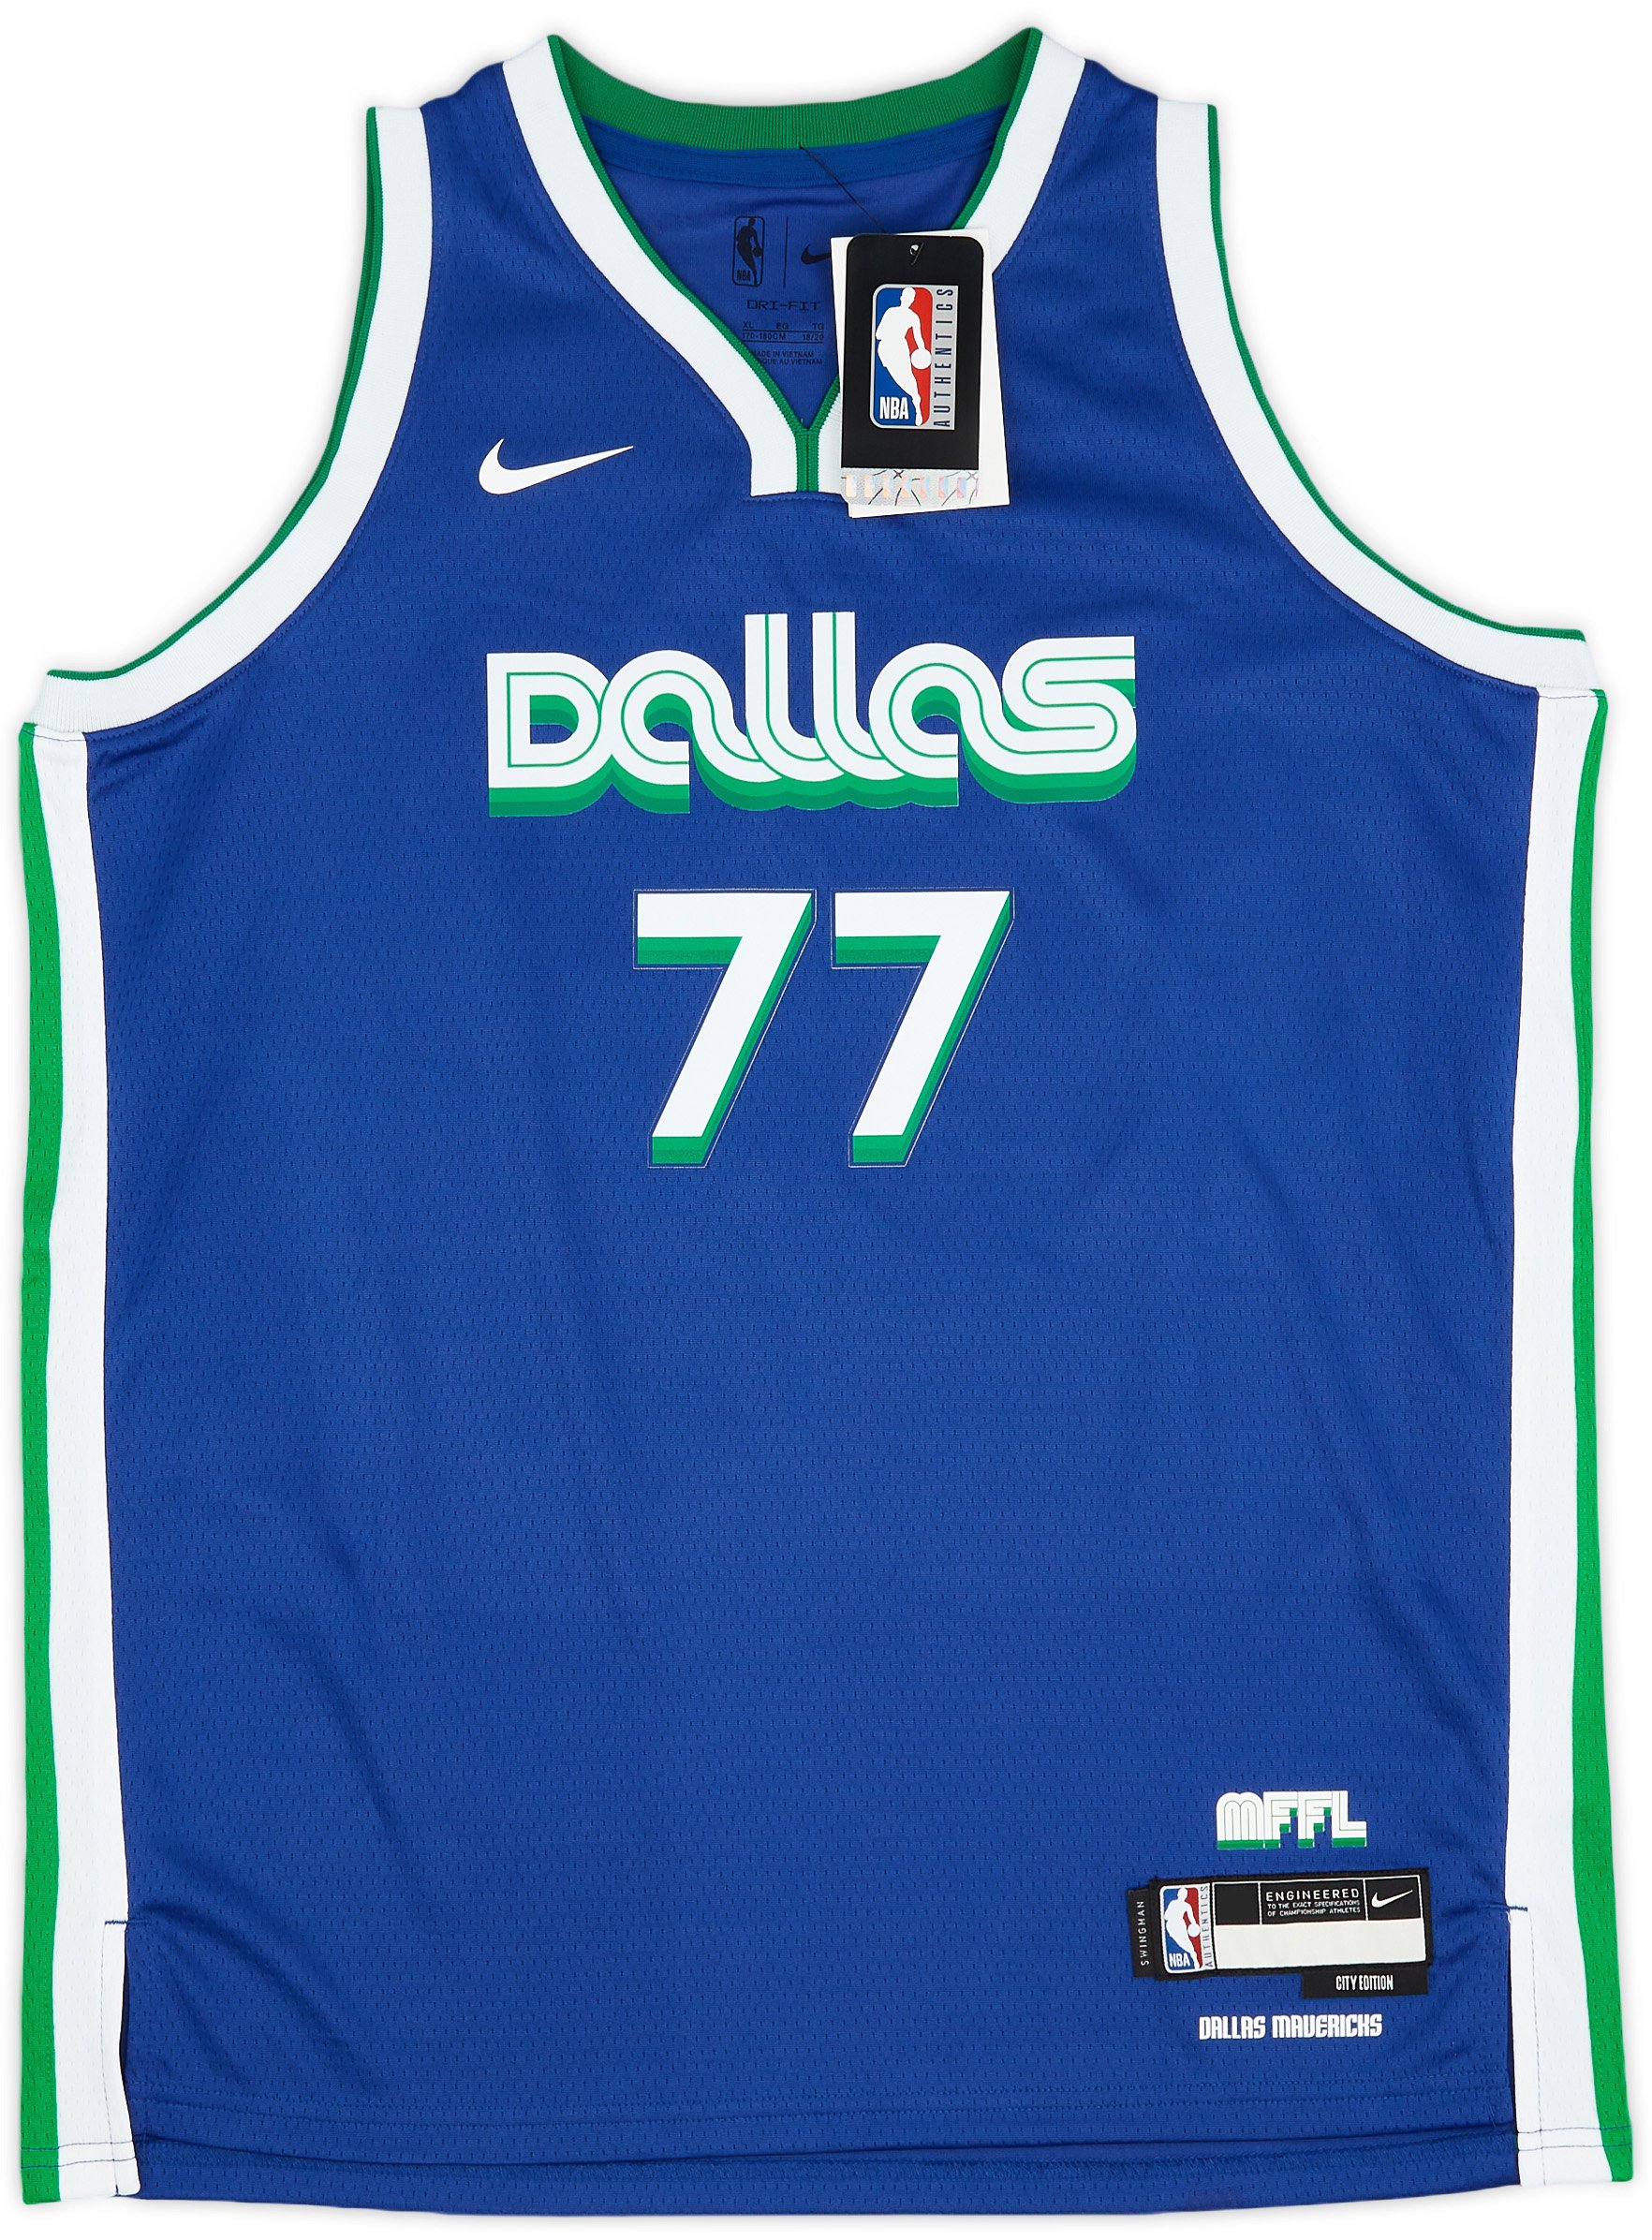 New Dallas Mavericks Luka Doncic Nike Swingman Jersey Sz Youth XL